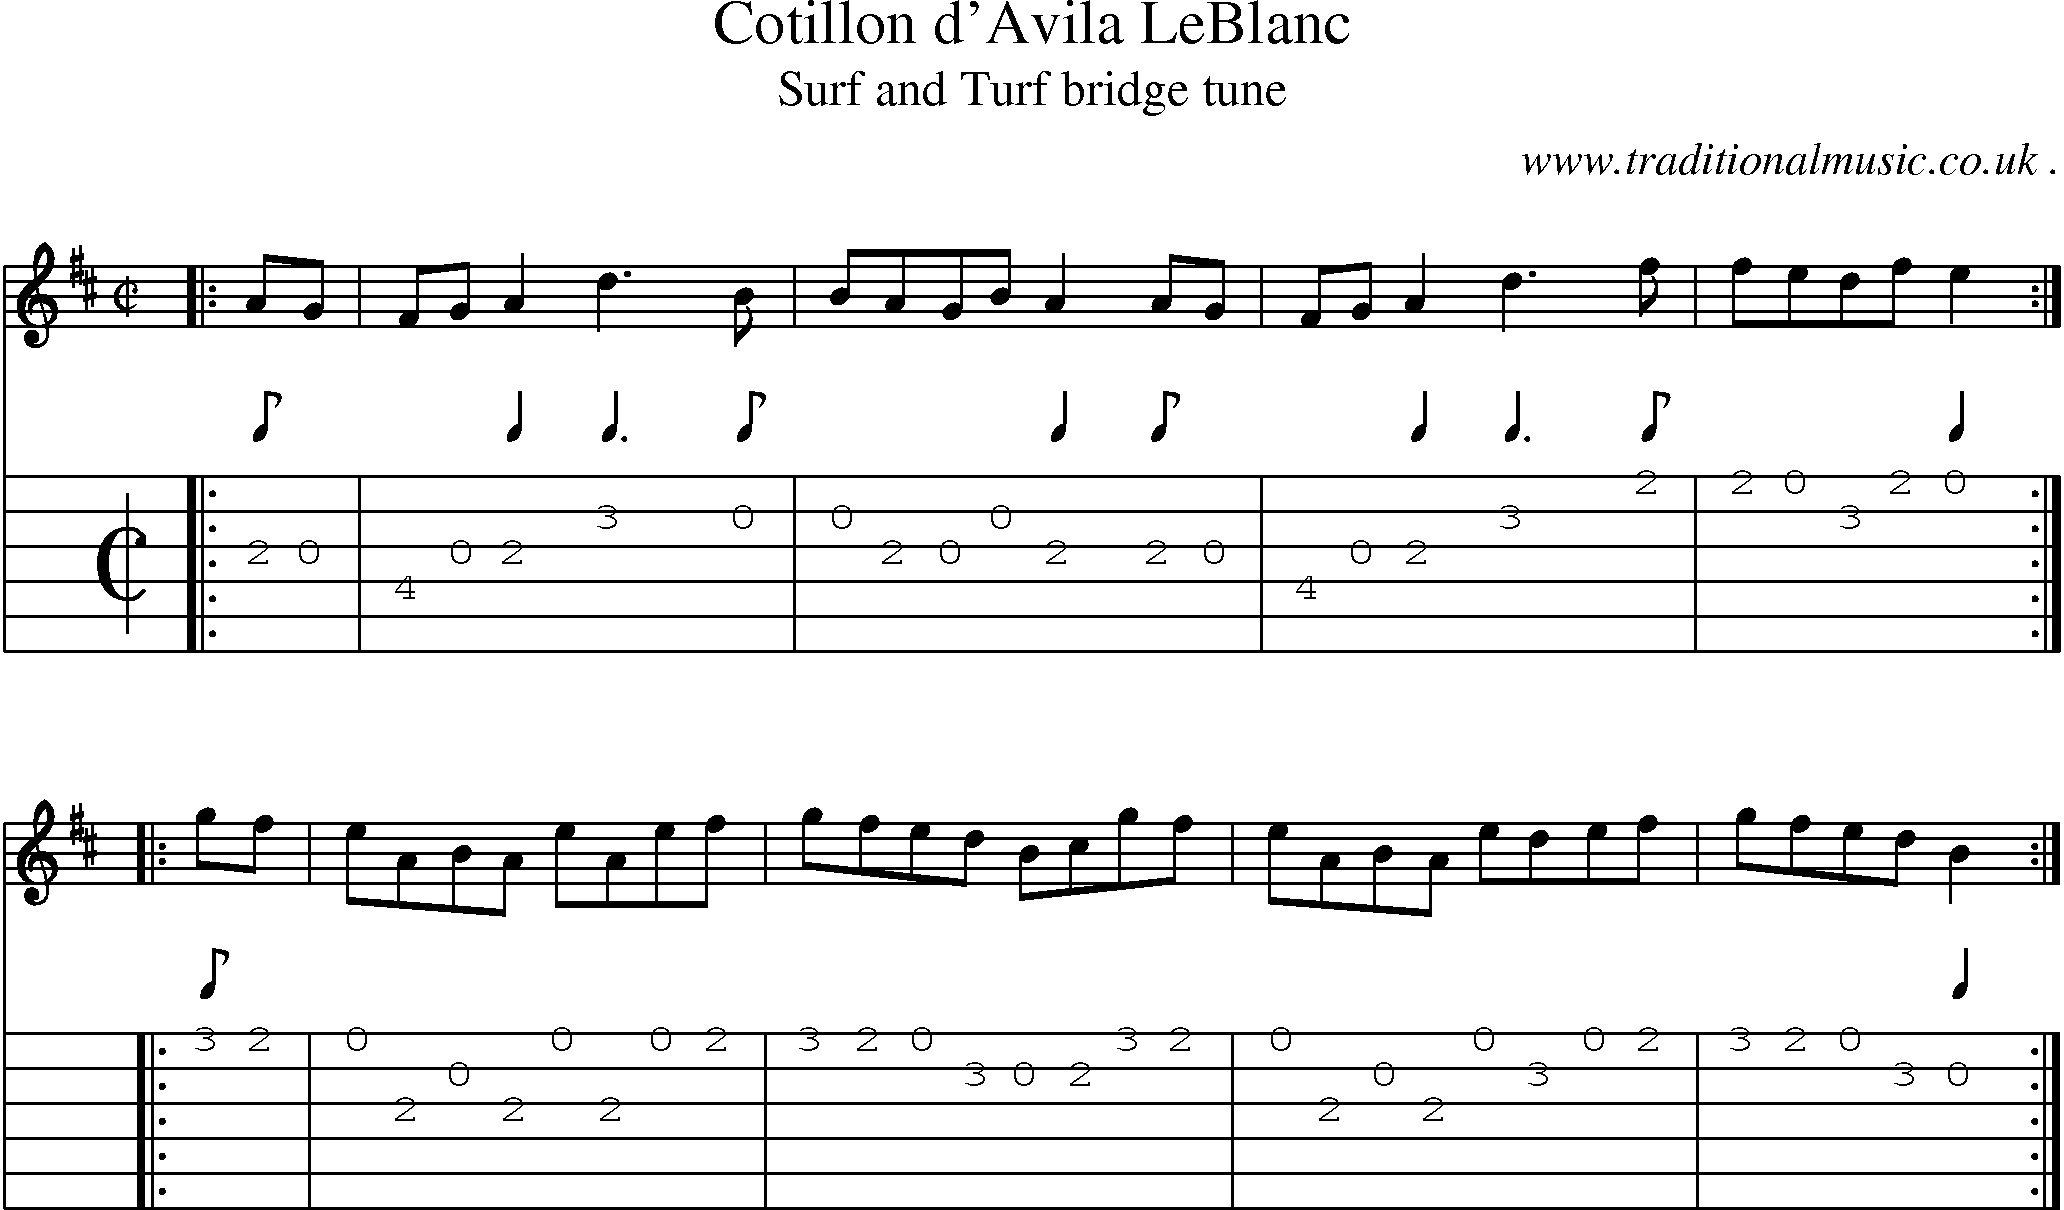 Sheet-music  score, Chords and Guitar Tabs for Cotillon Davila Leblanc